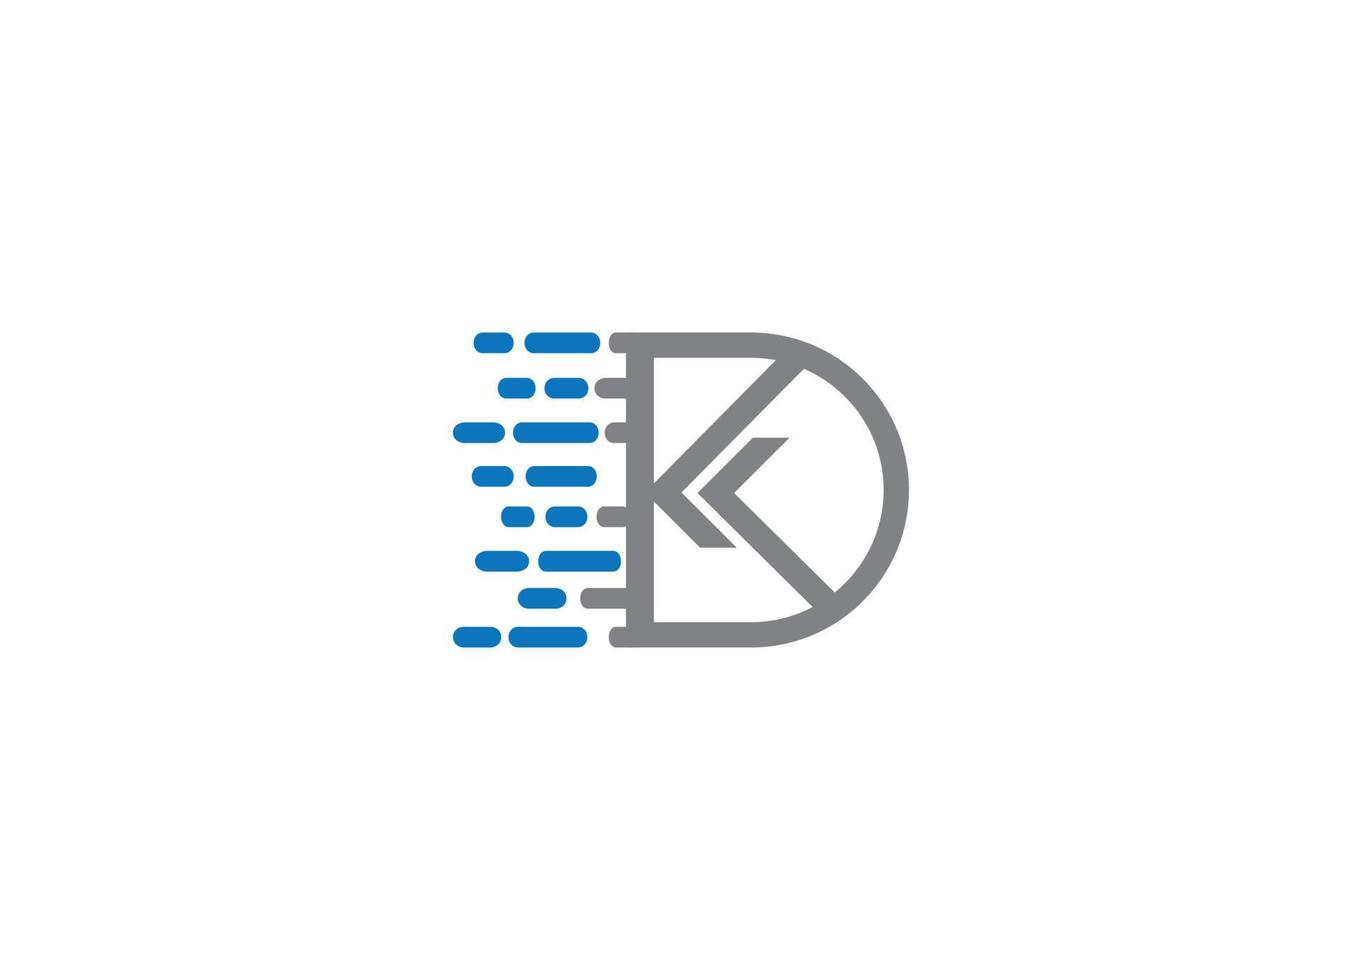 dk-Buchstaben-Logo-Design mit kreativer moderner Vektorsymbolvorlage vektor